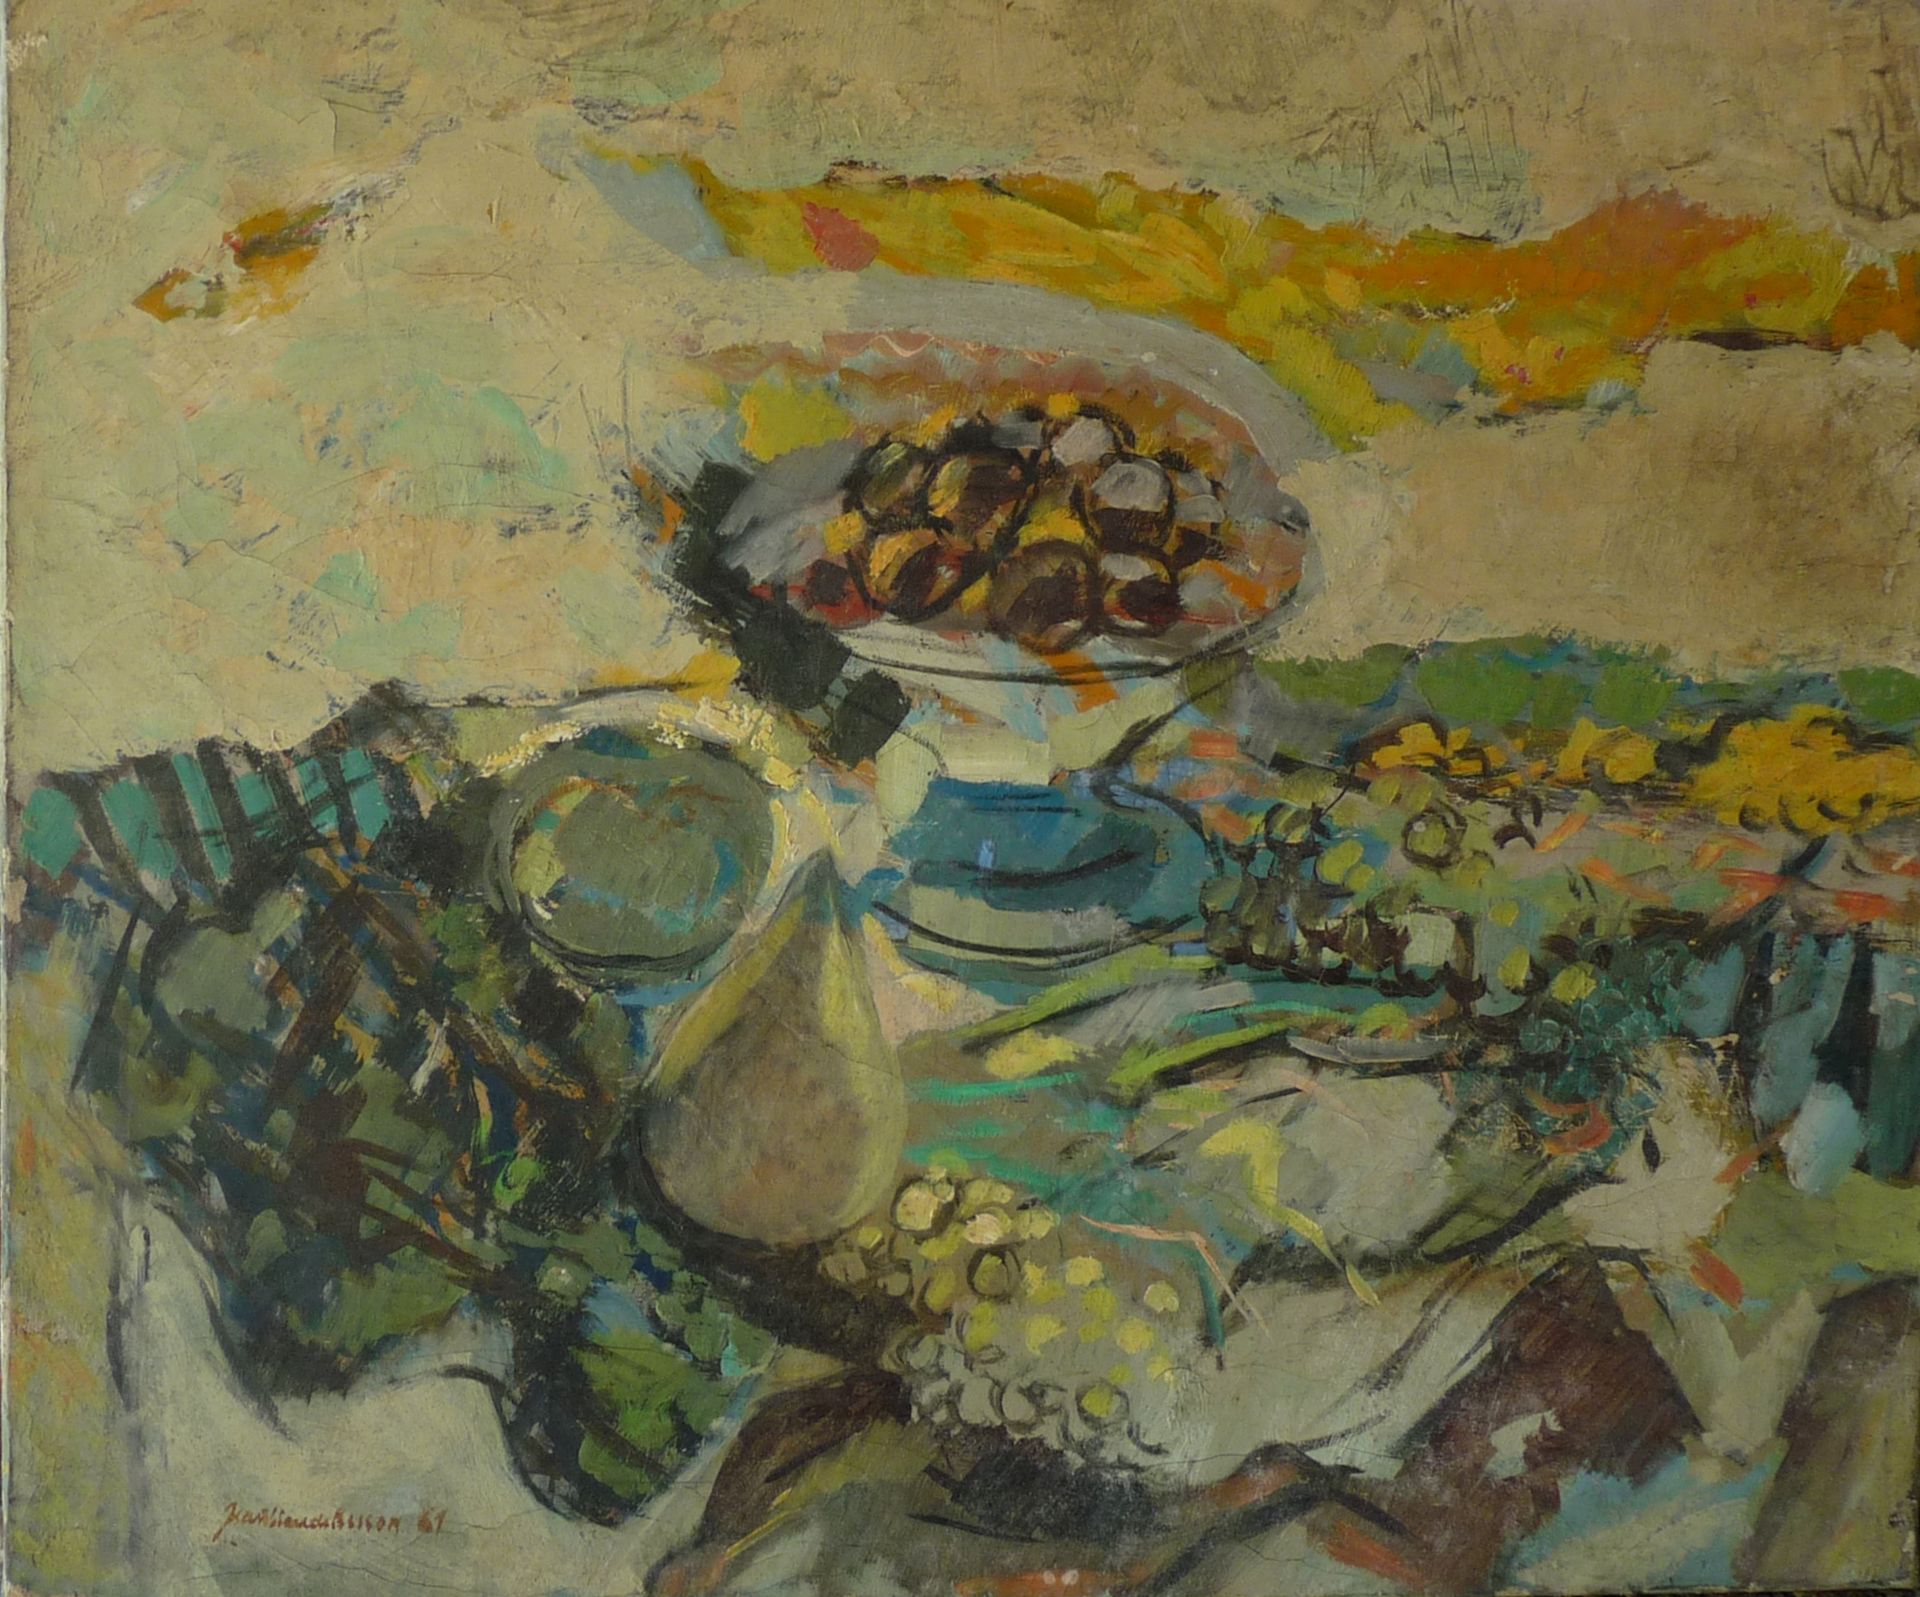 Null 让-克劳德-贝松-吉拉尔 (1938-2021)

无题38》，1961年

布面油画，左下方有签名和日期

46 x 55厘米